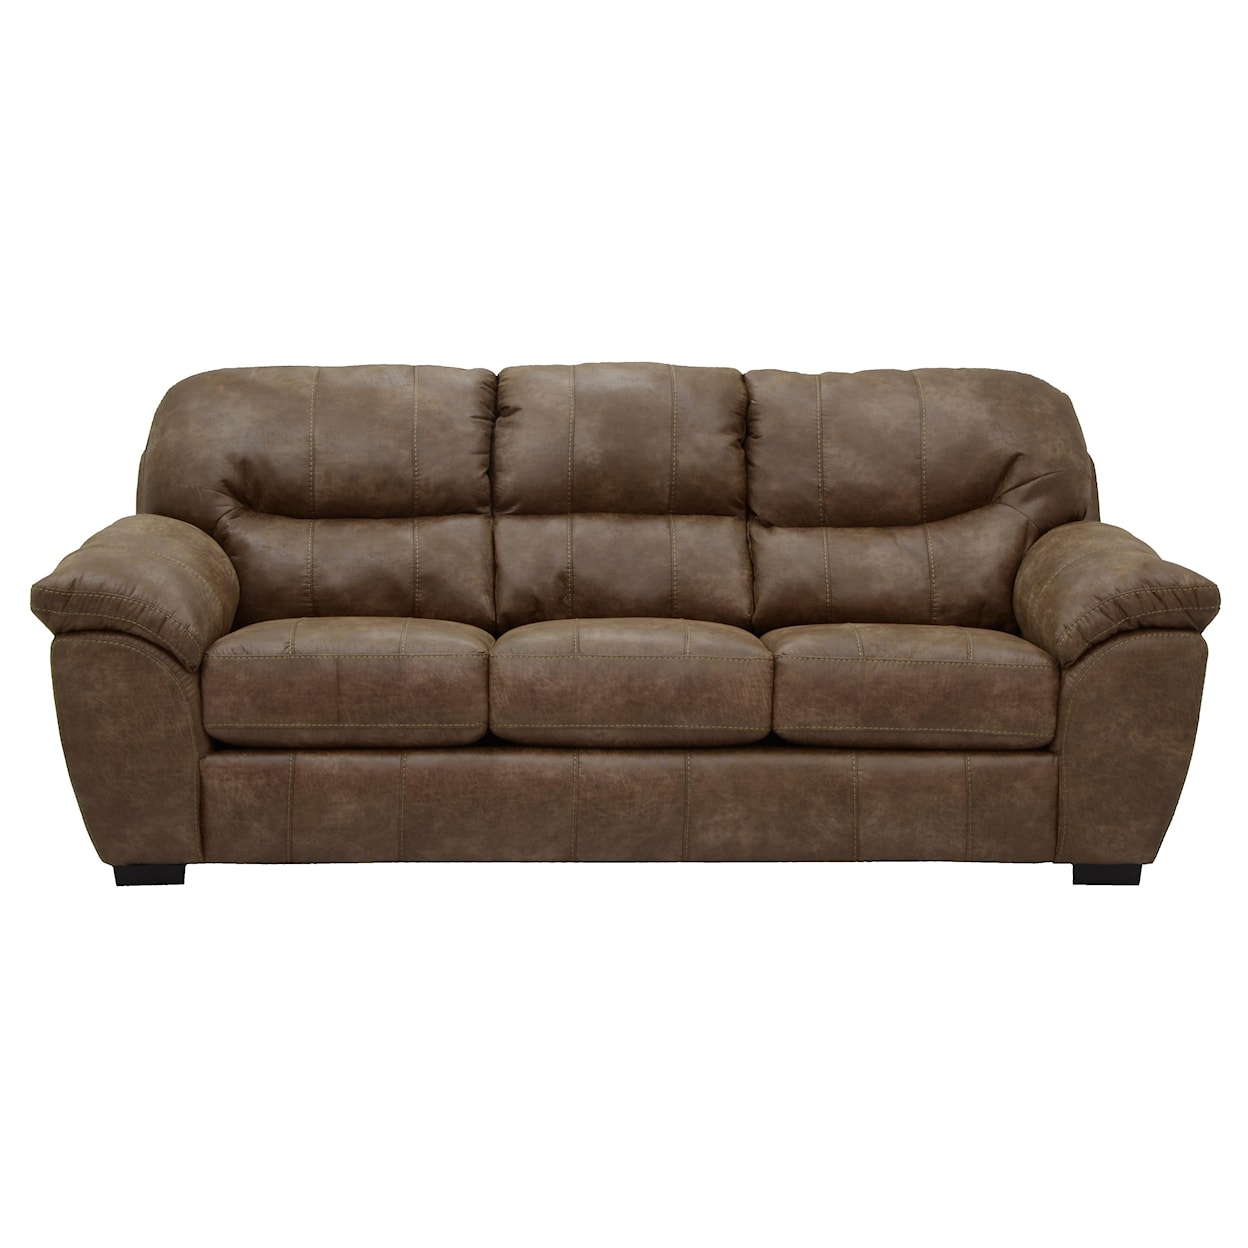 Carolina Furniture 4453 Grant Sleeper Sofa